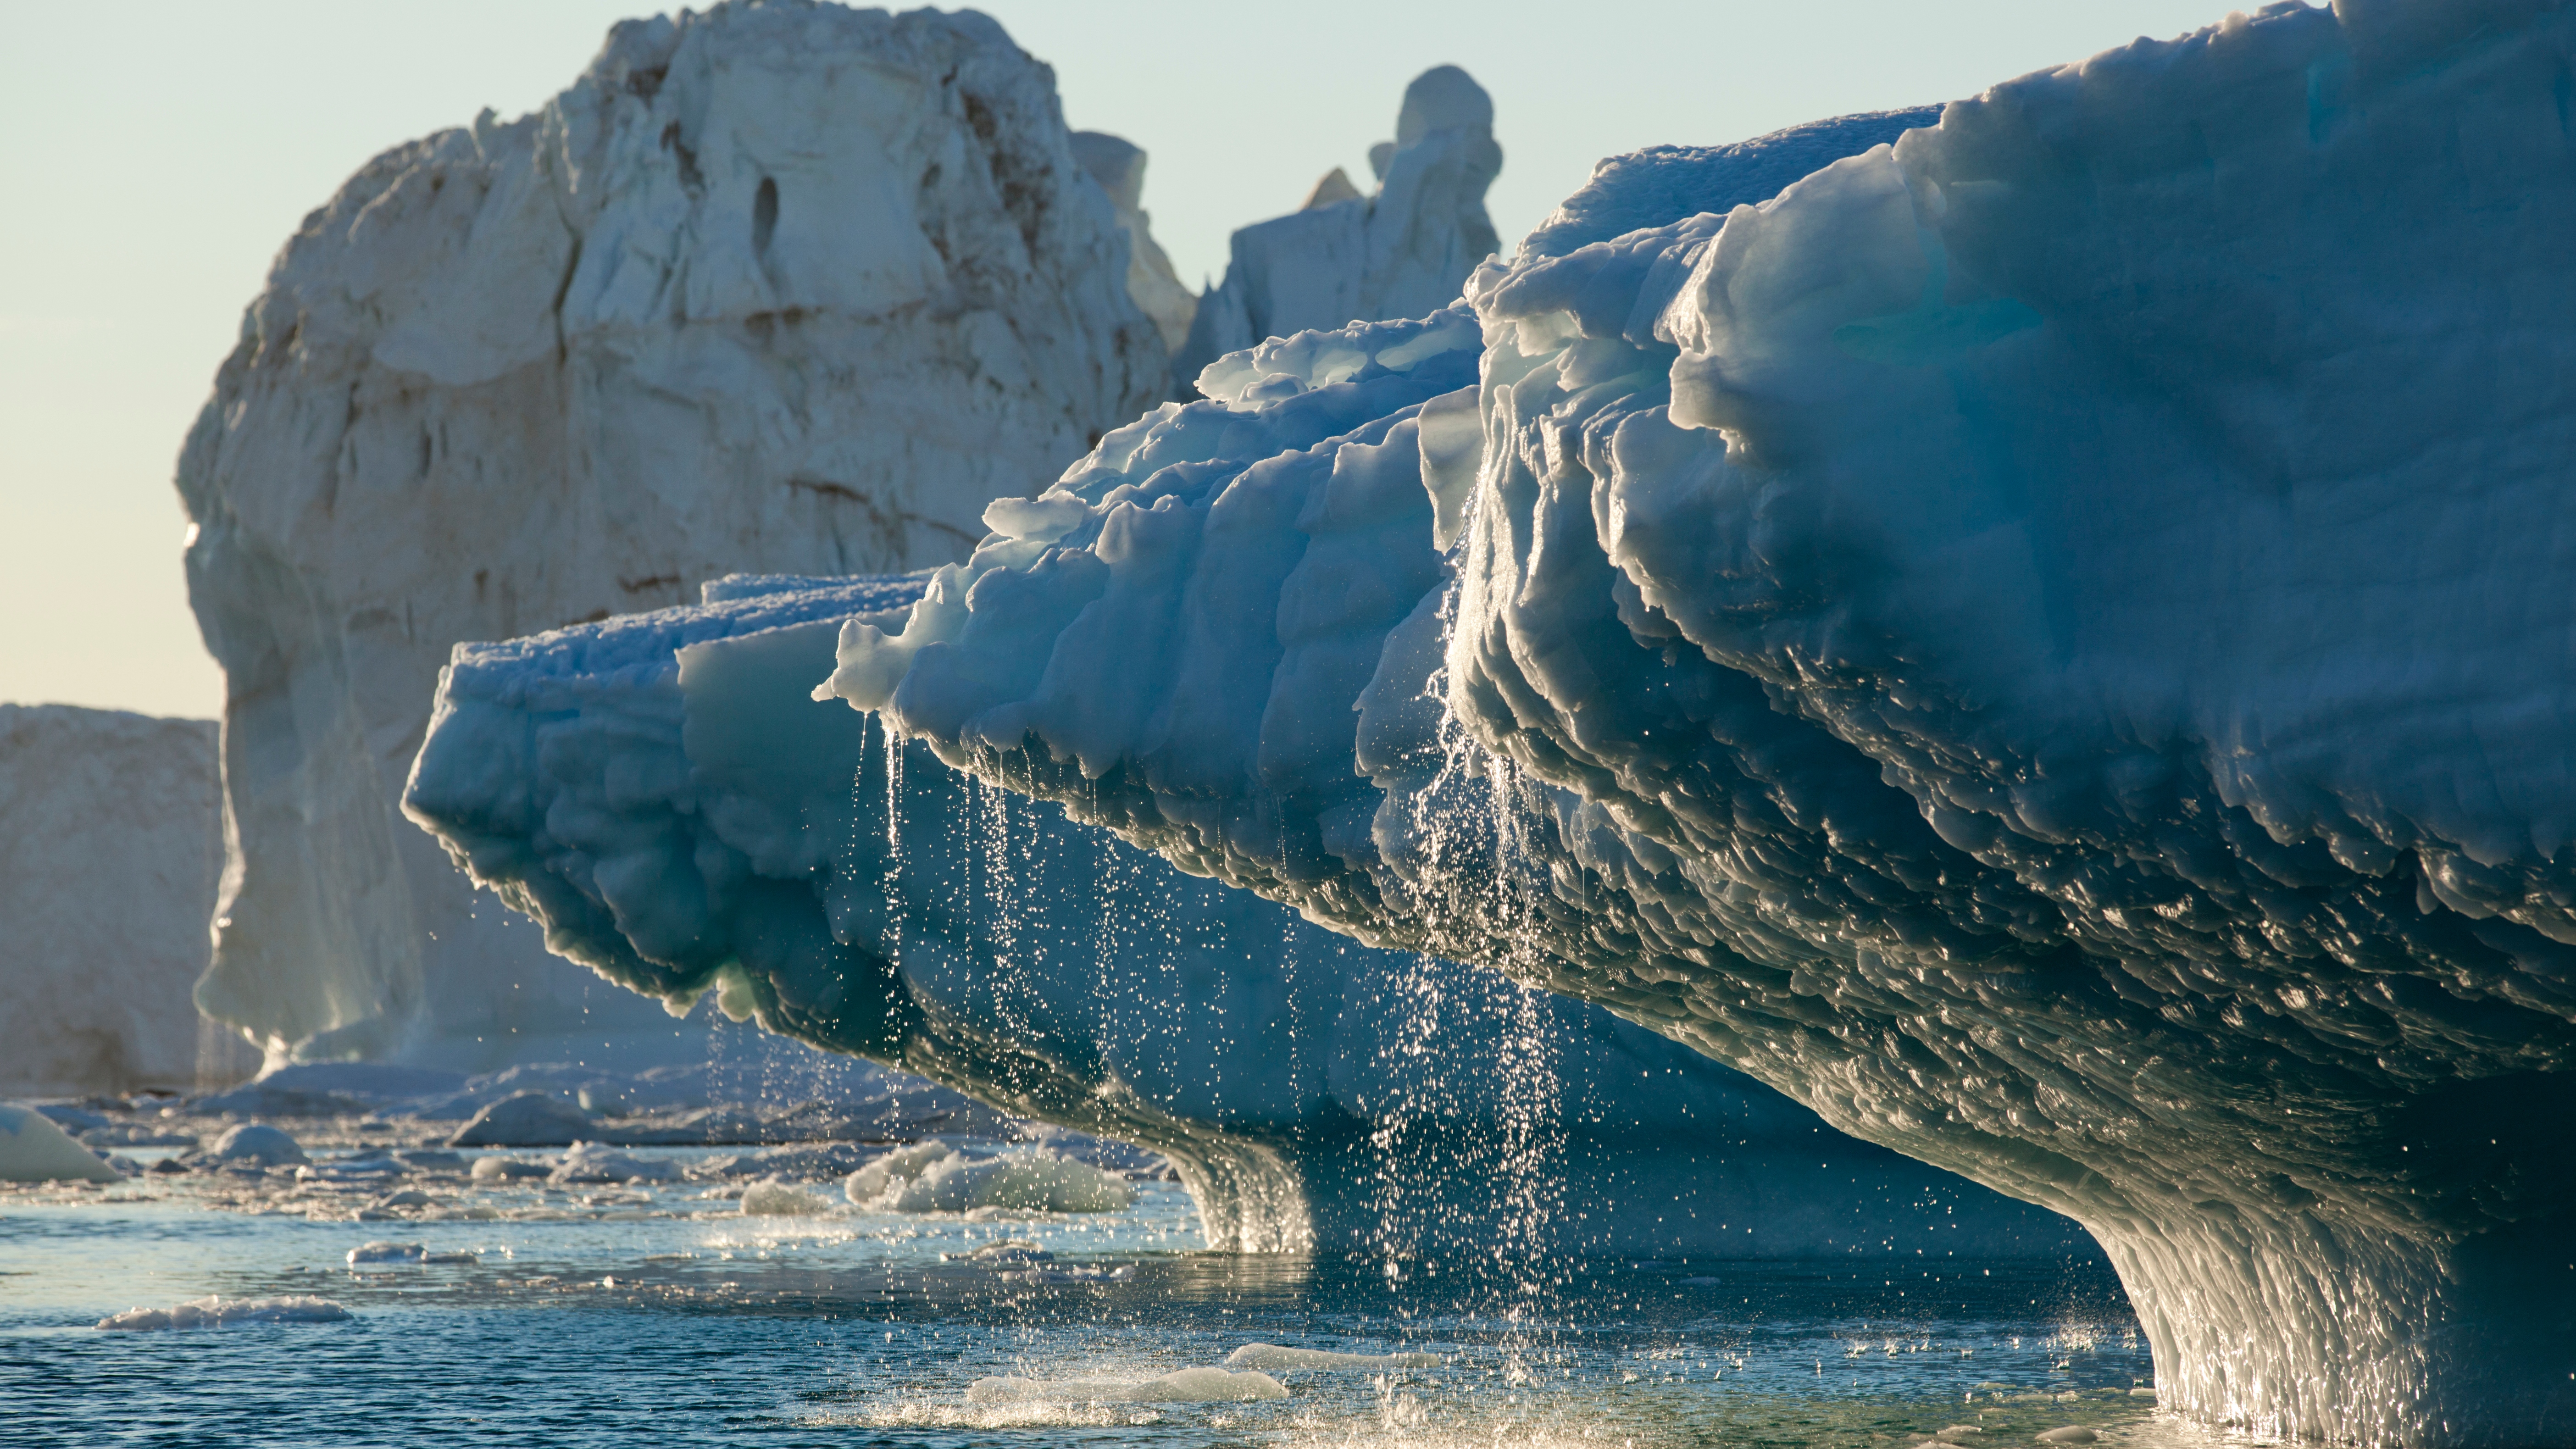 Iceberg and climate change 